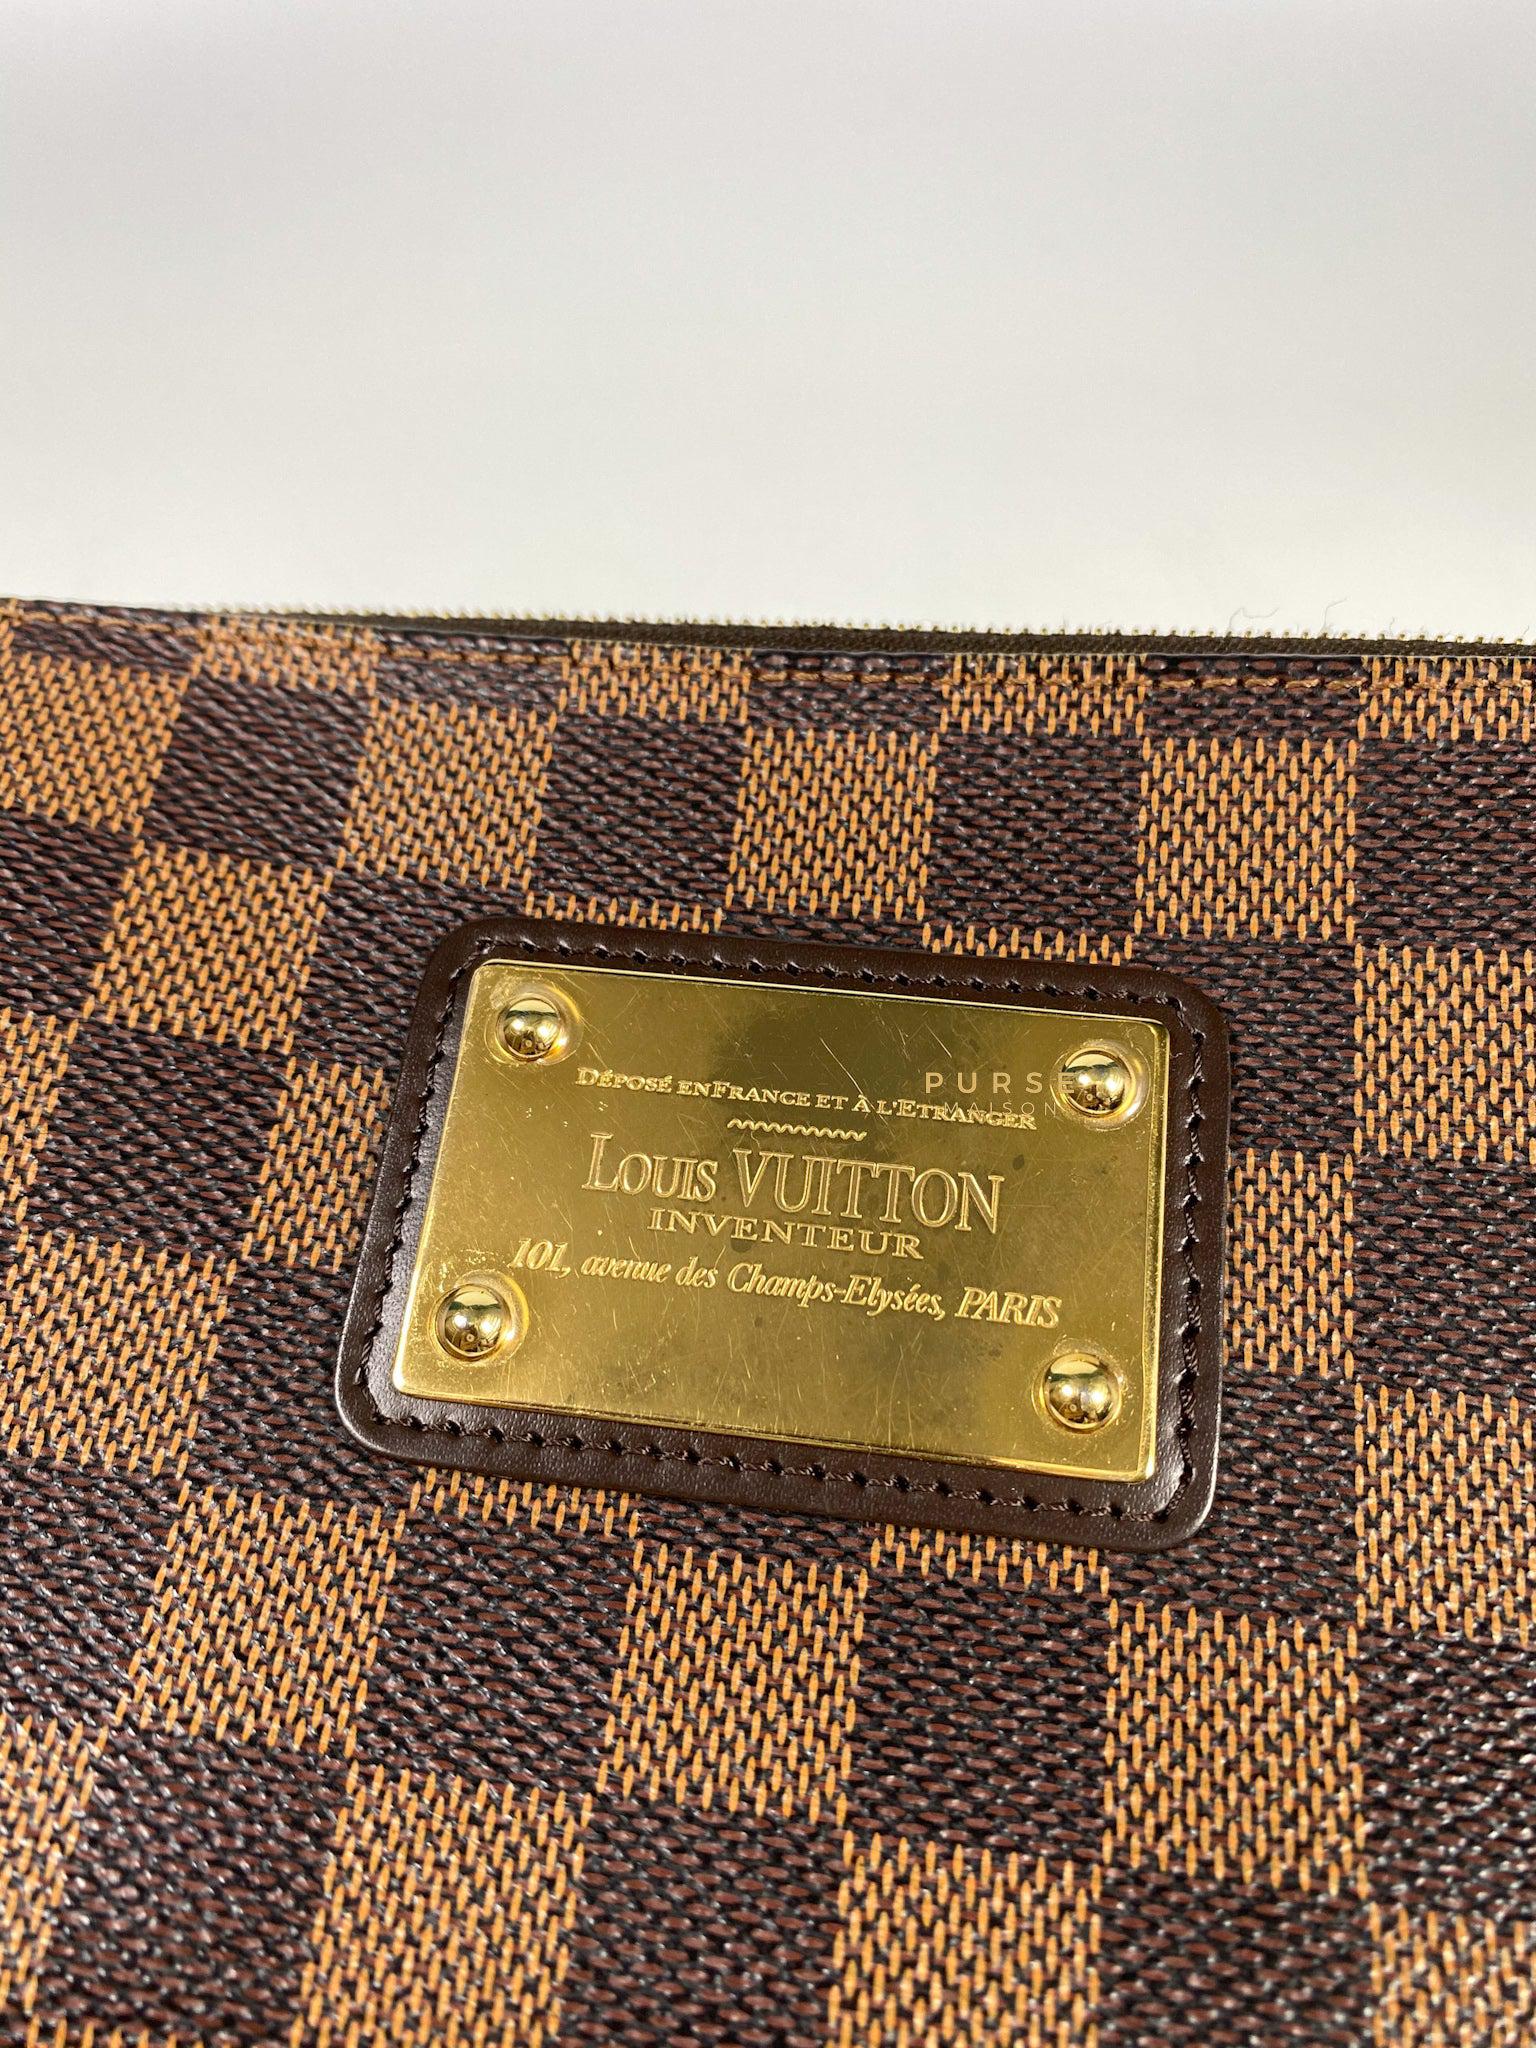 Louis Vuitton 101: Date Codes